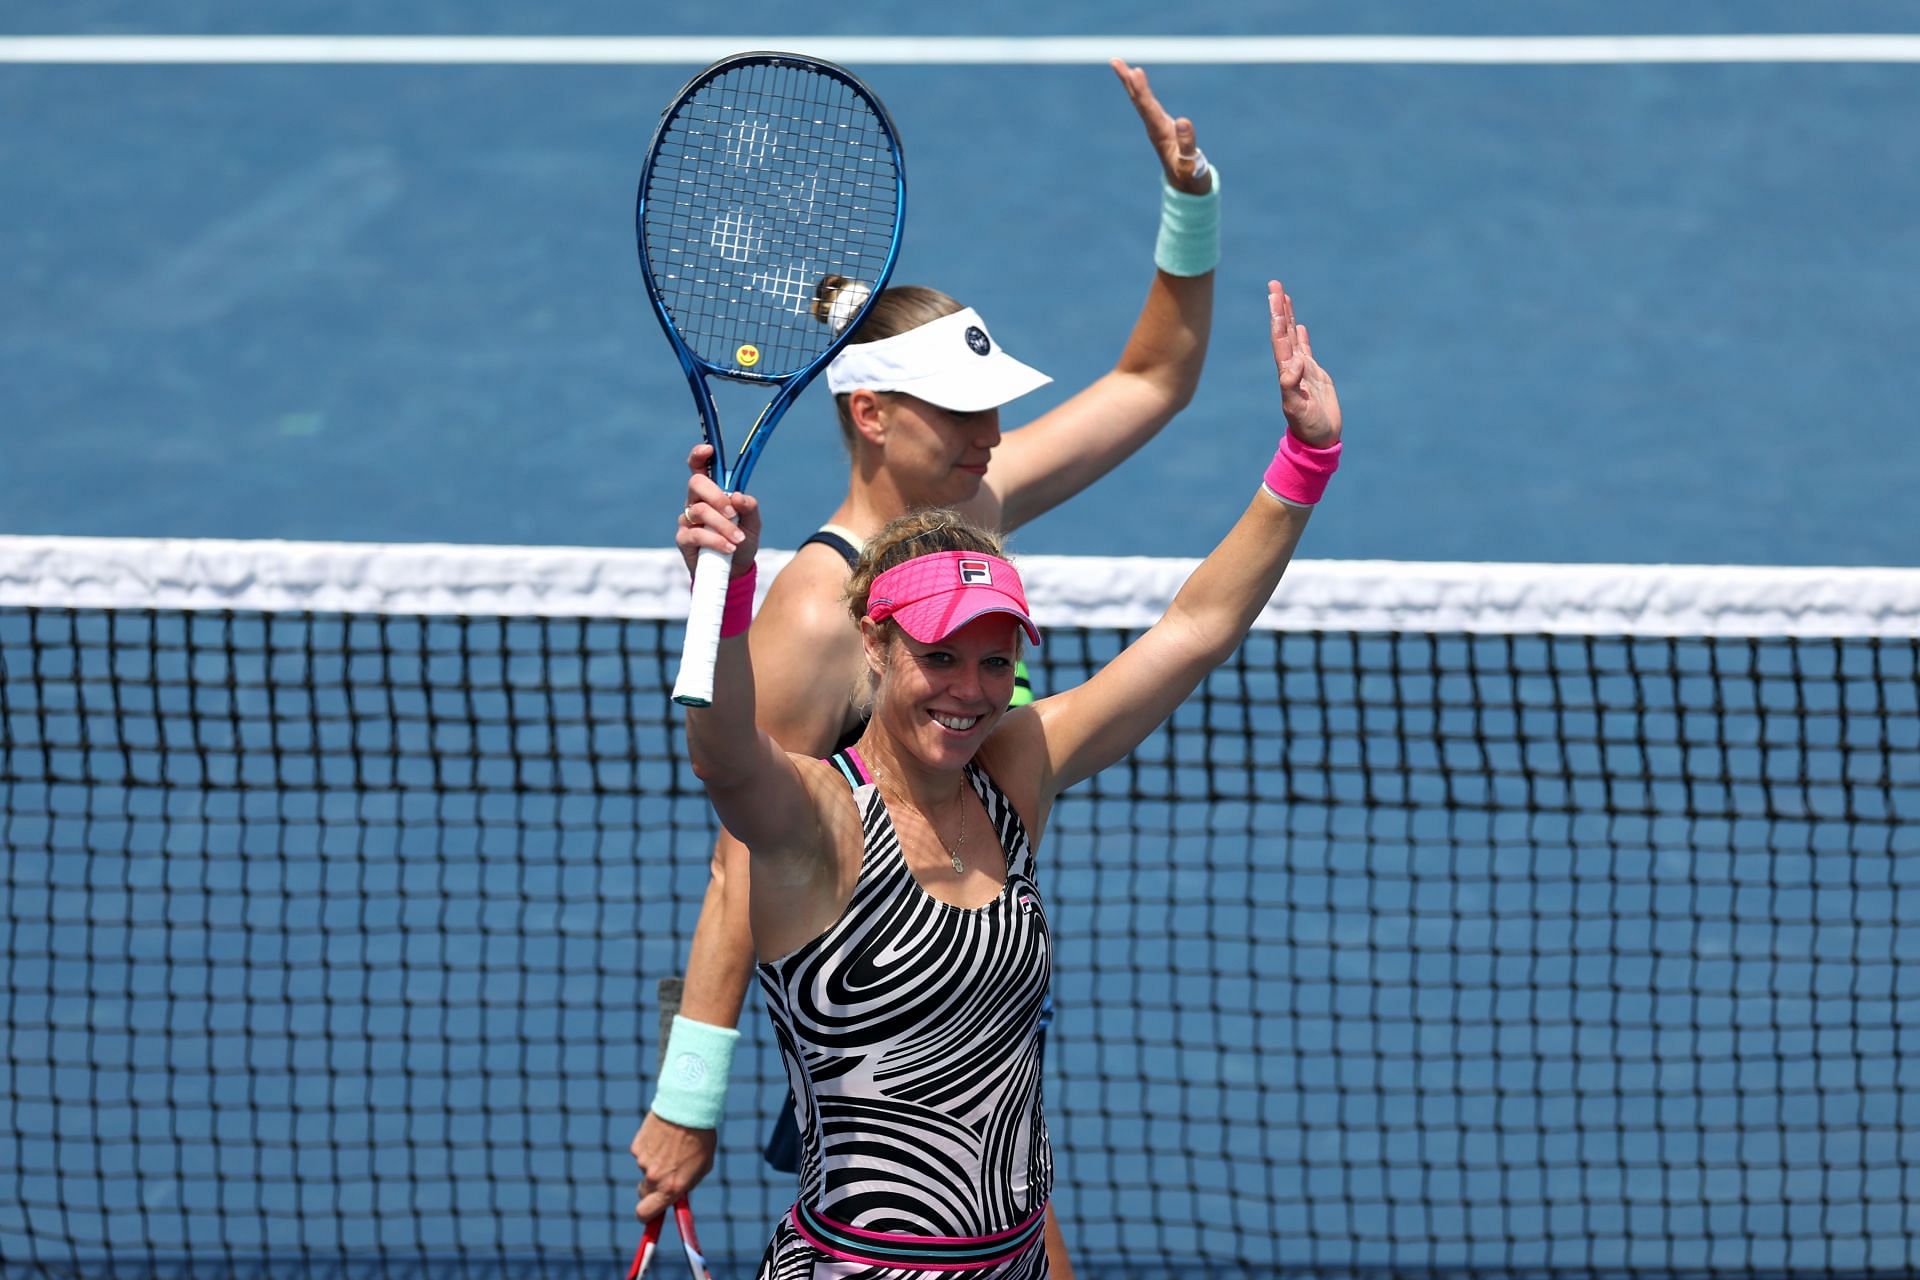 Luisa Stefani, Djokovic e Gauff nas semis do US Open 2023